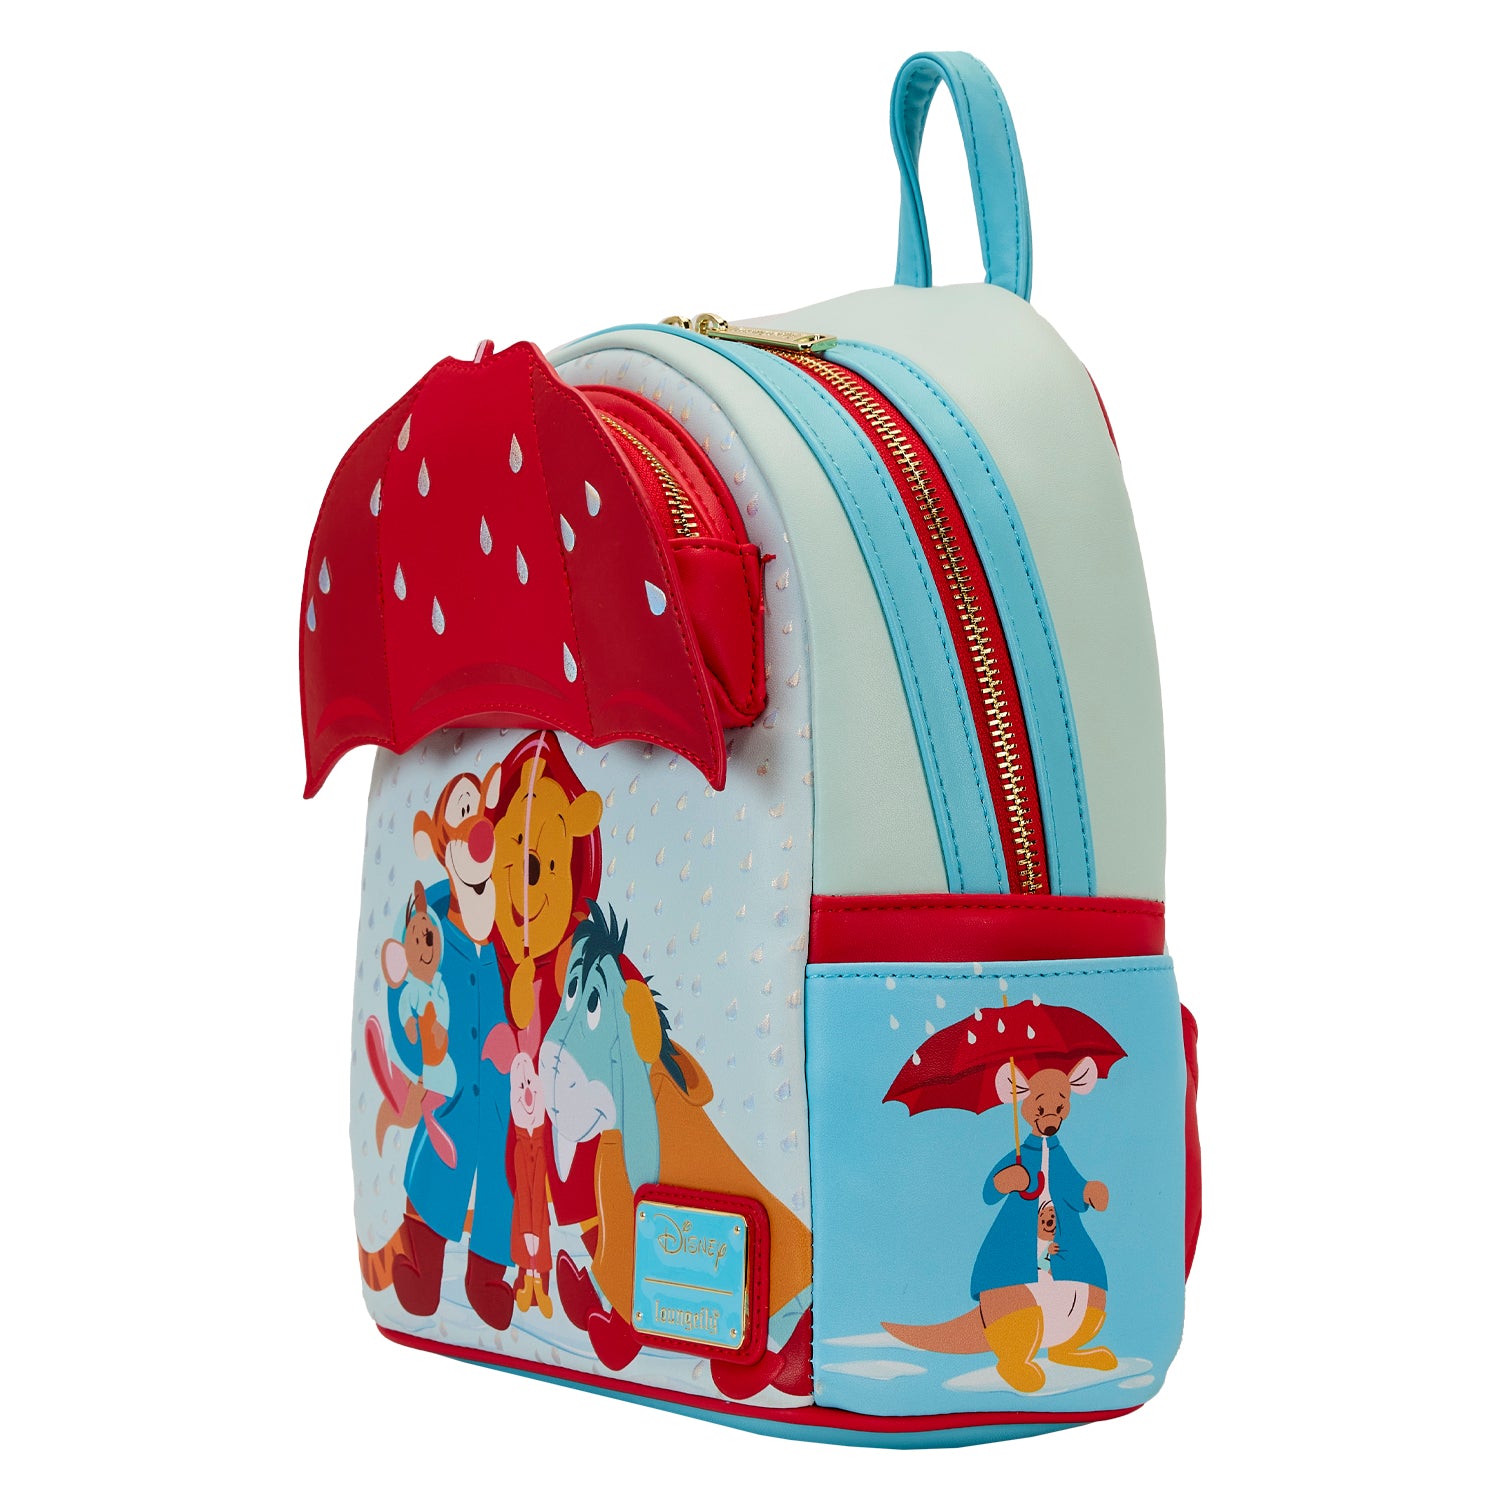 Disney | Winnie The Pooh and Friends Rainy Day Mini Backpack